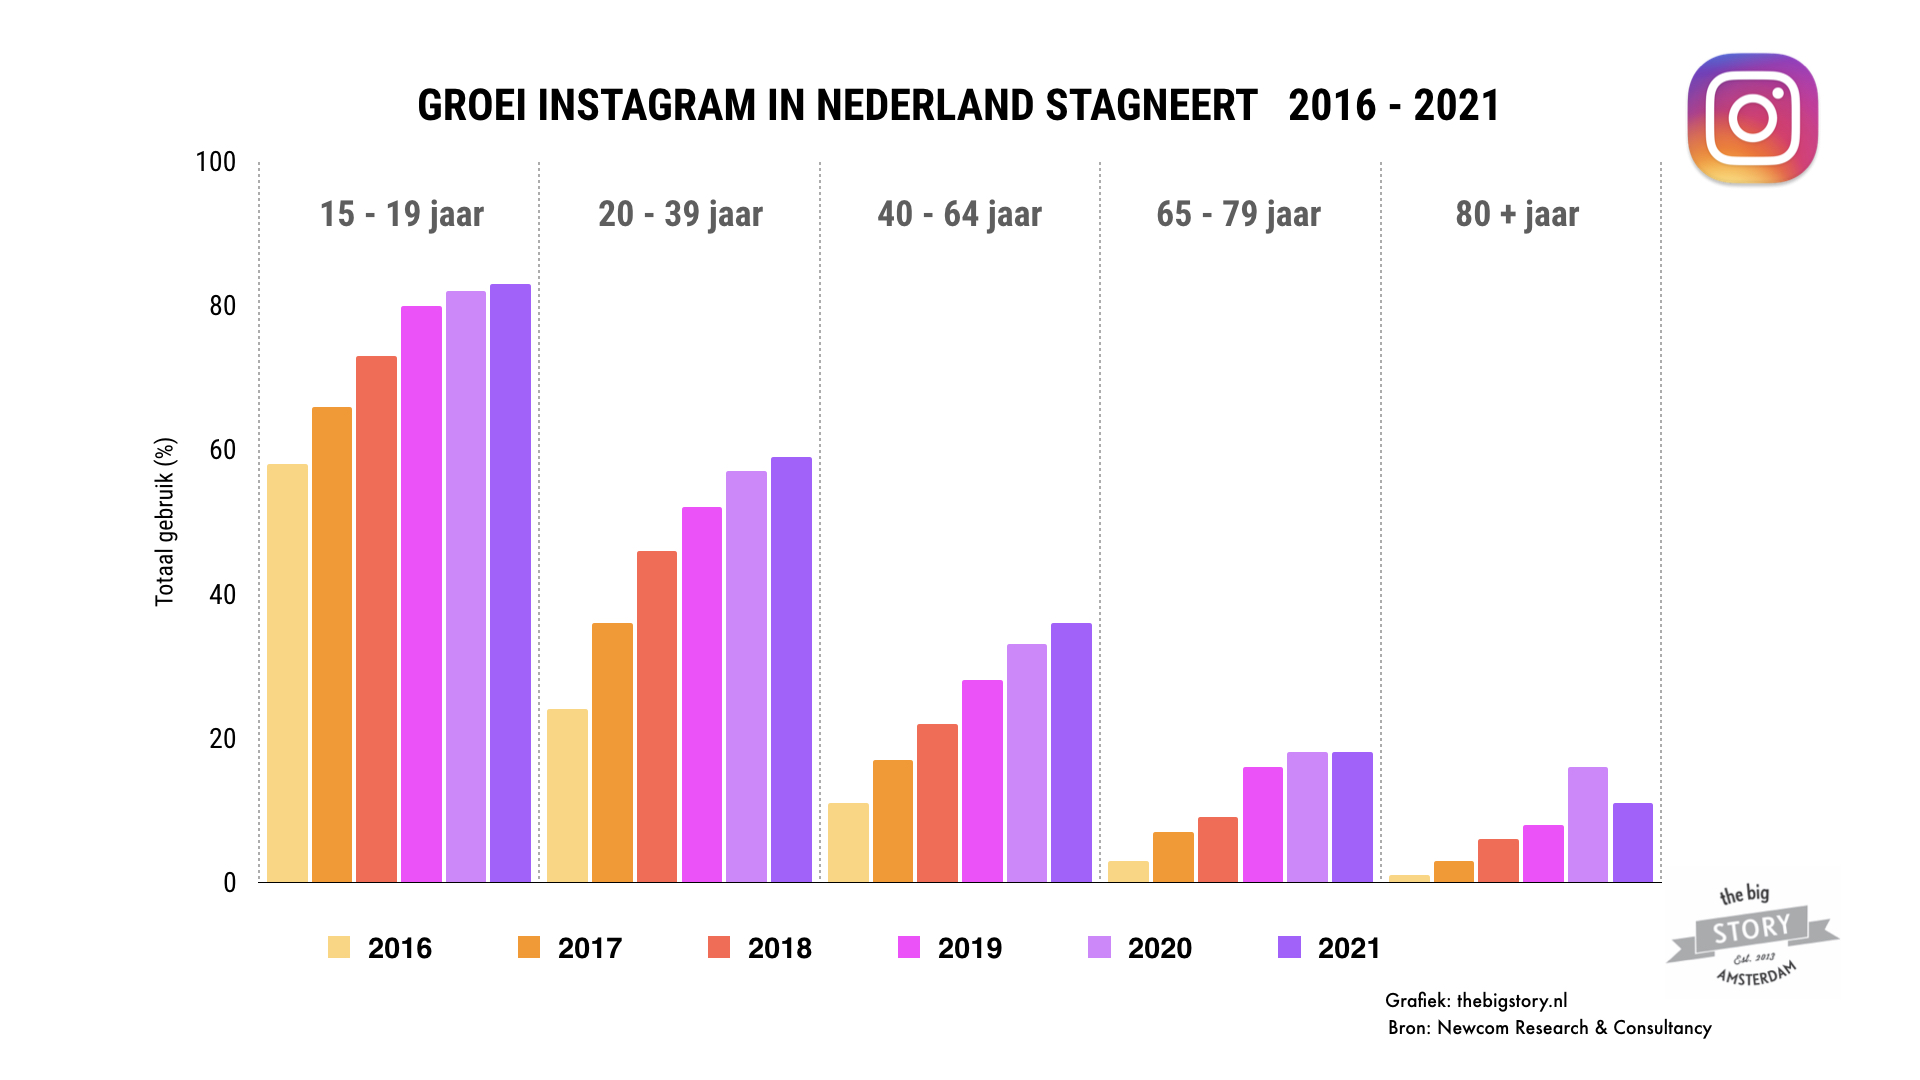 groei Instagram gebruik in Nederland stagneert 2016 - 2021